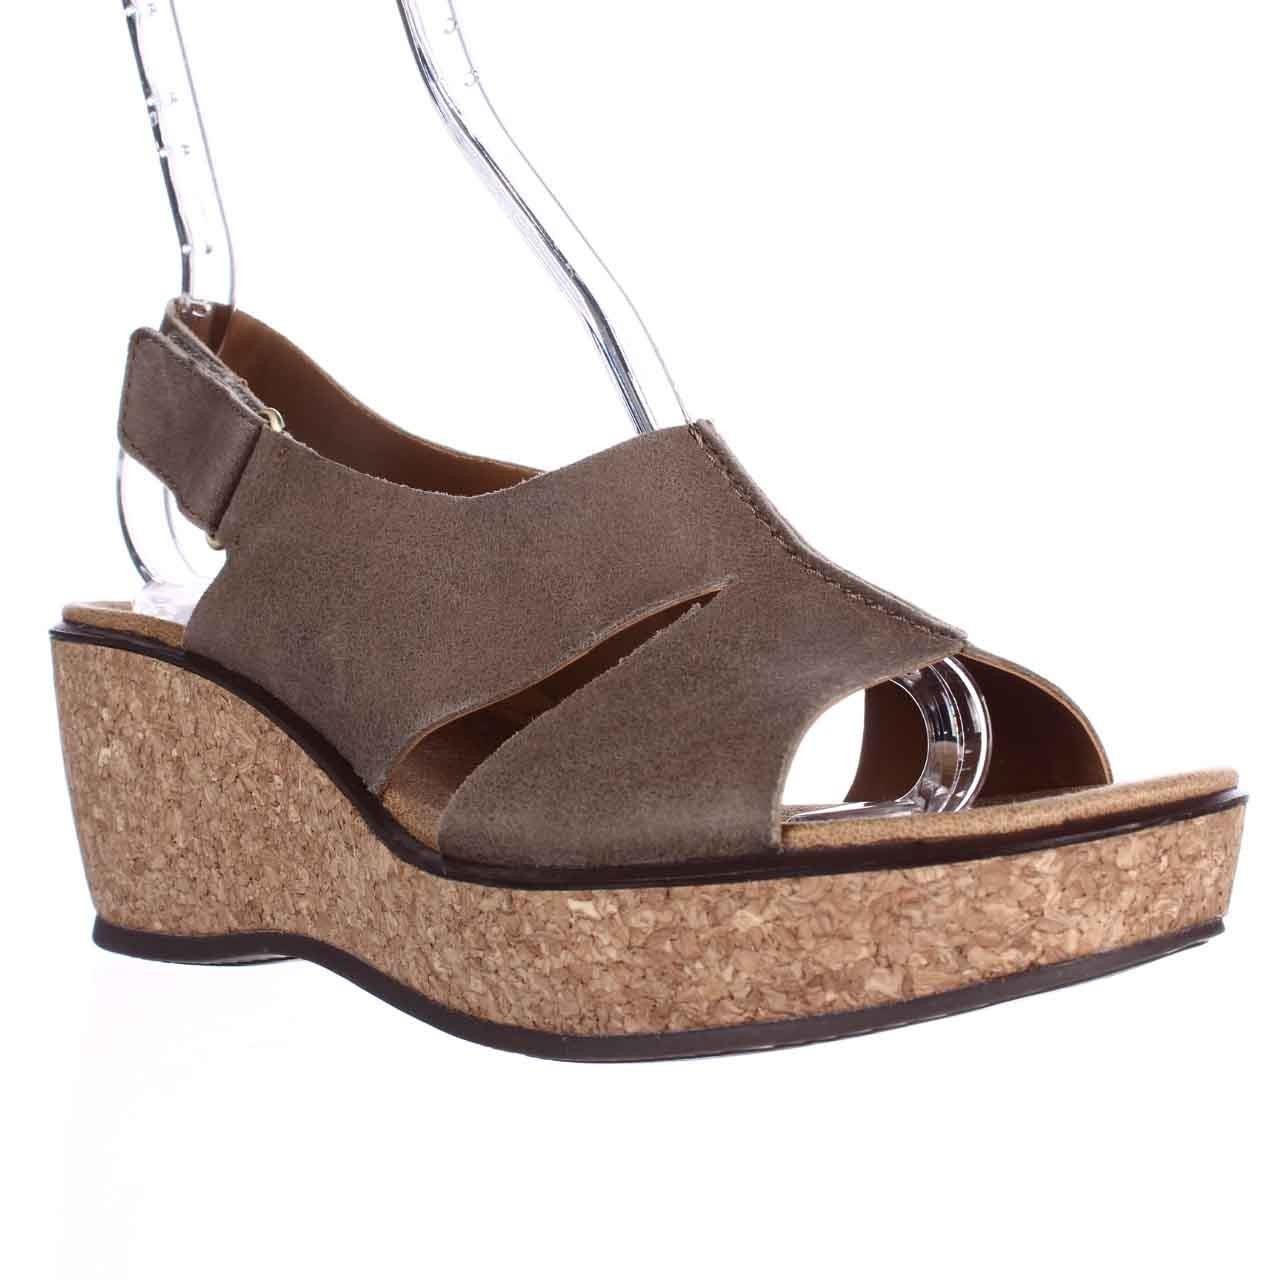 Lyst - Clarks Rosemund Dune Wedge Comfort Sandals in Brown